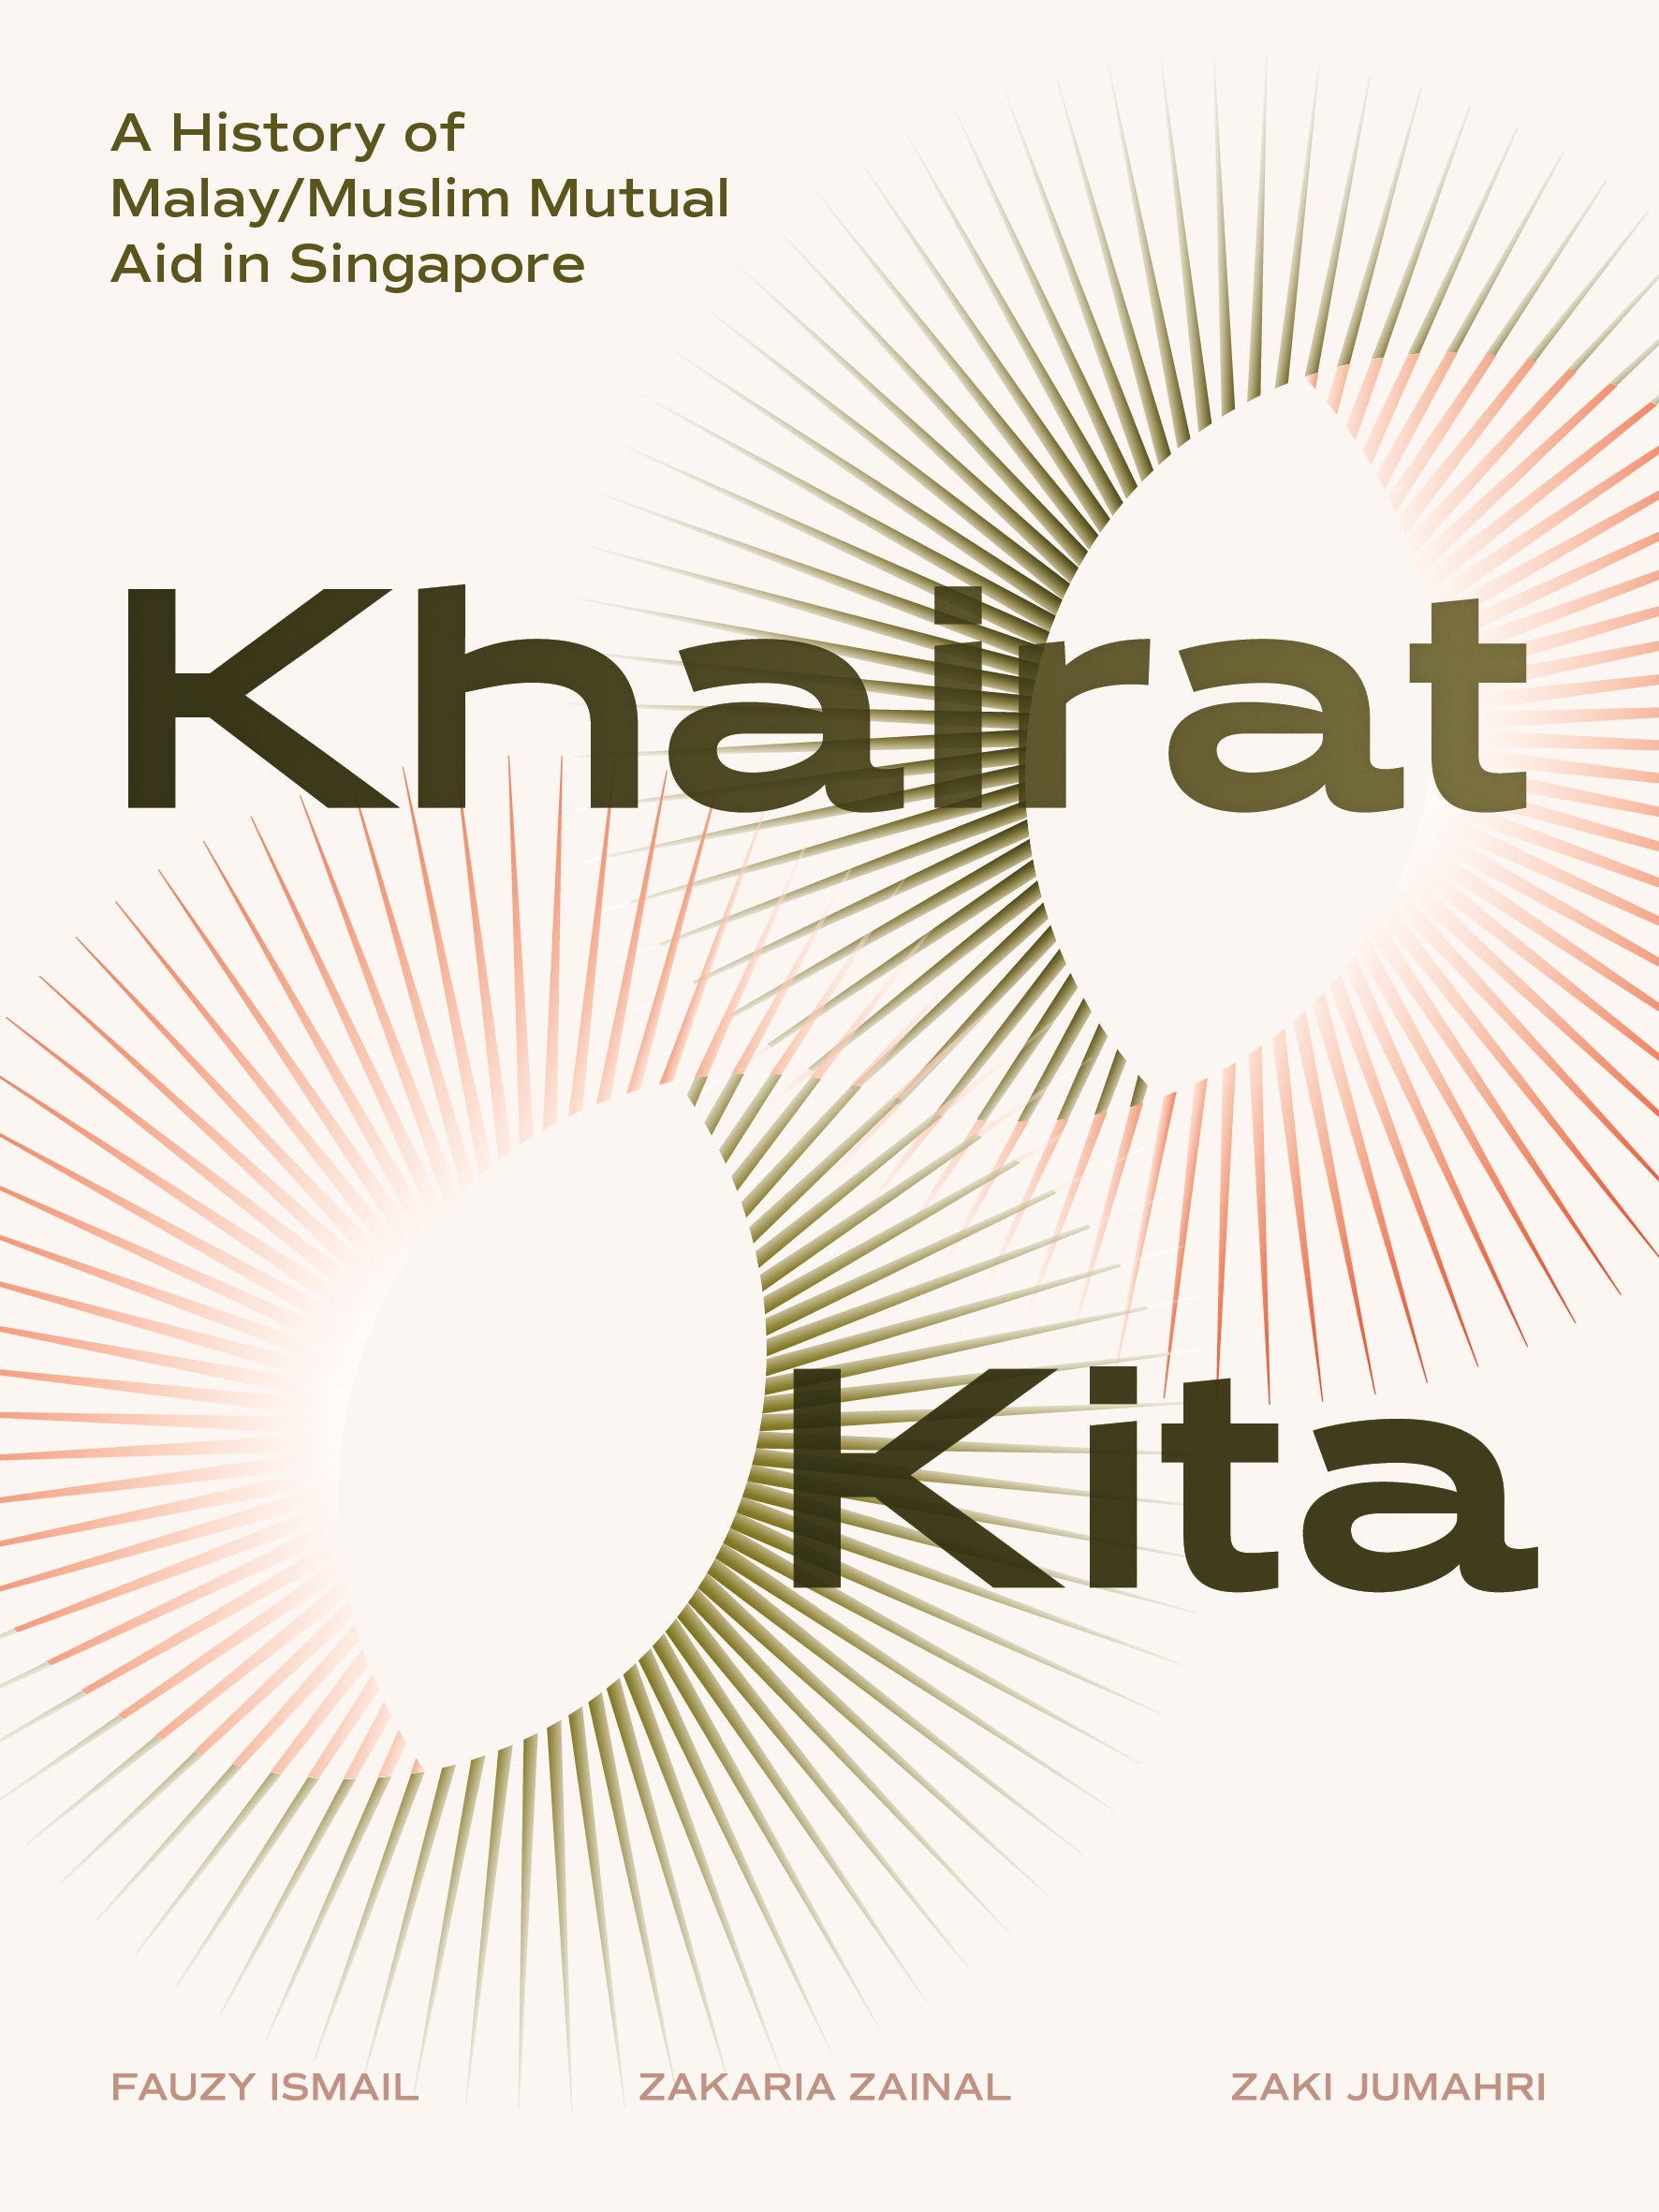 Khairat Kita: A History of Malay/Muslim Mutual Aid in Singapore